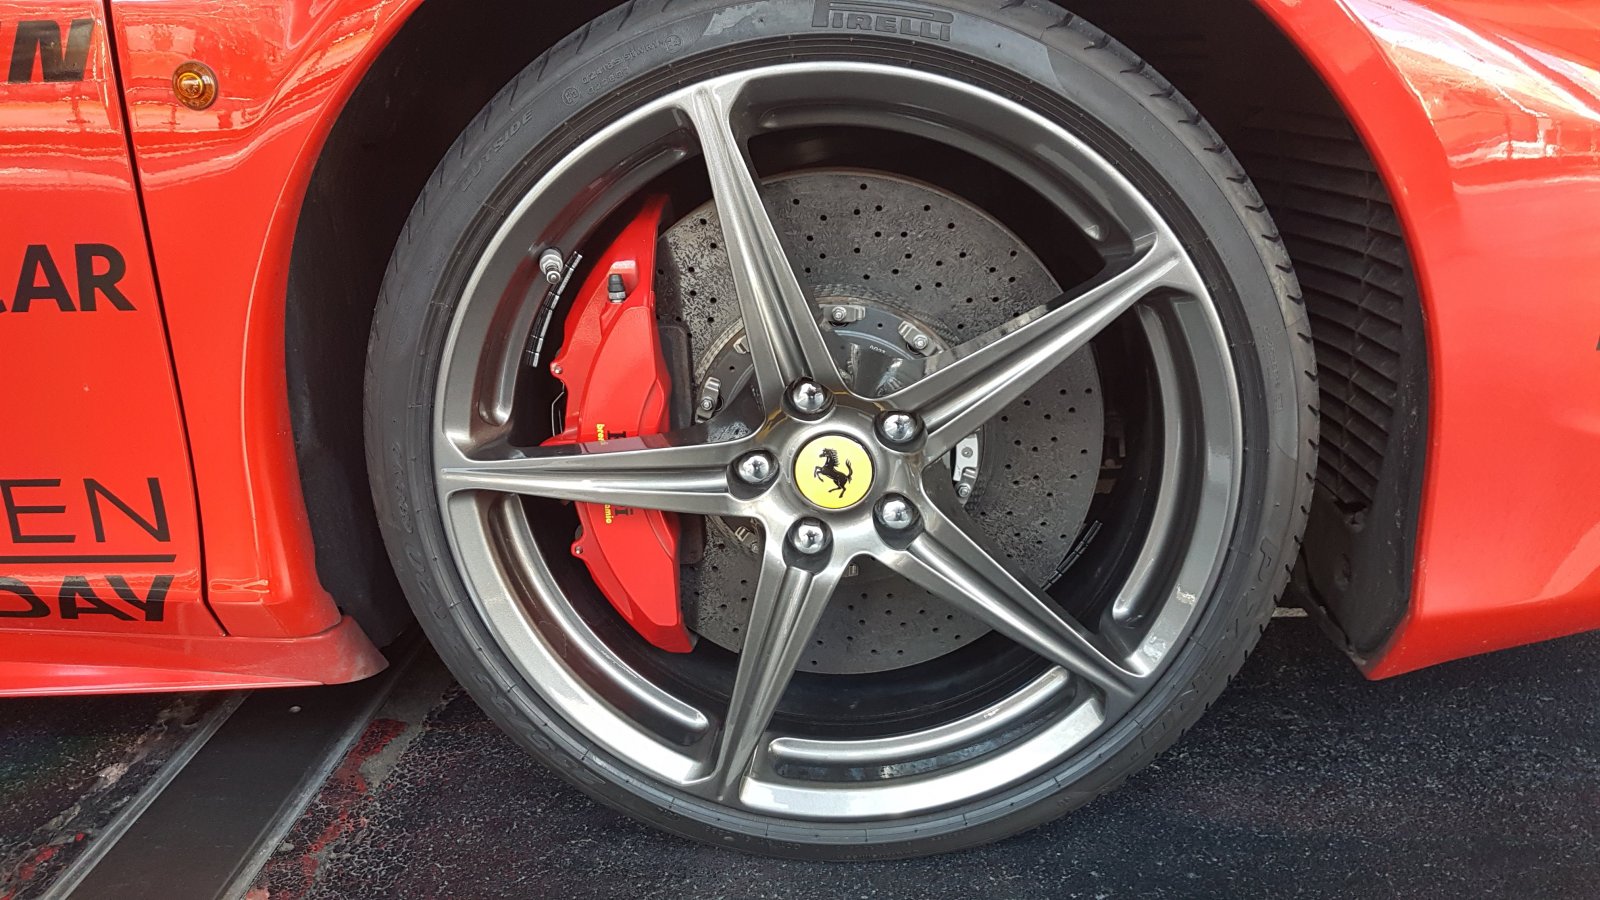 Ferrari 458 brakes